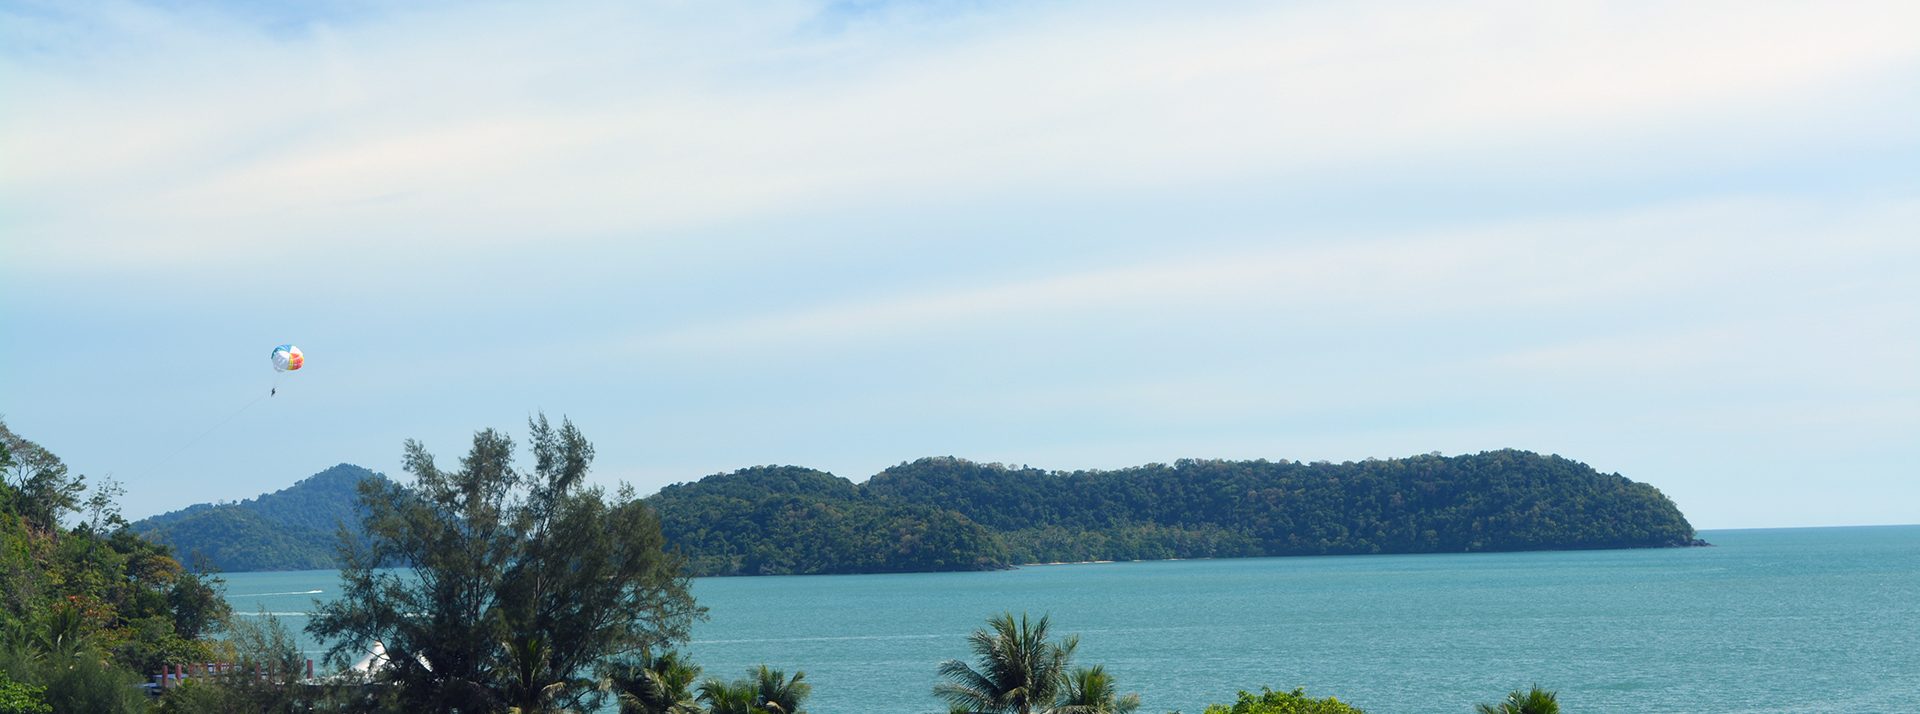 Langkawi island, Malaysia